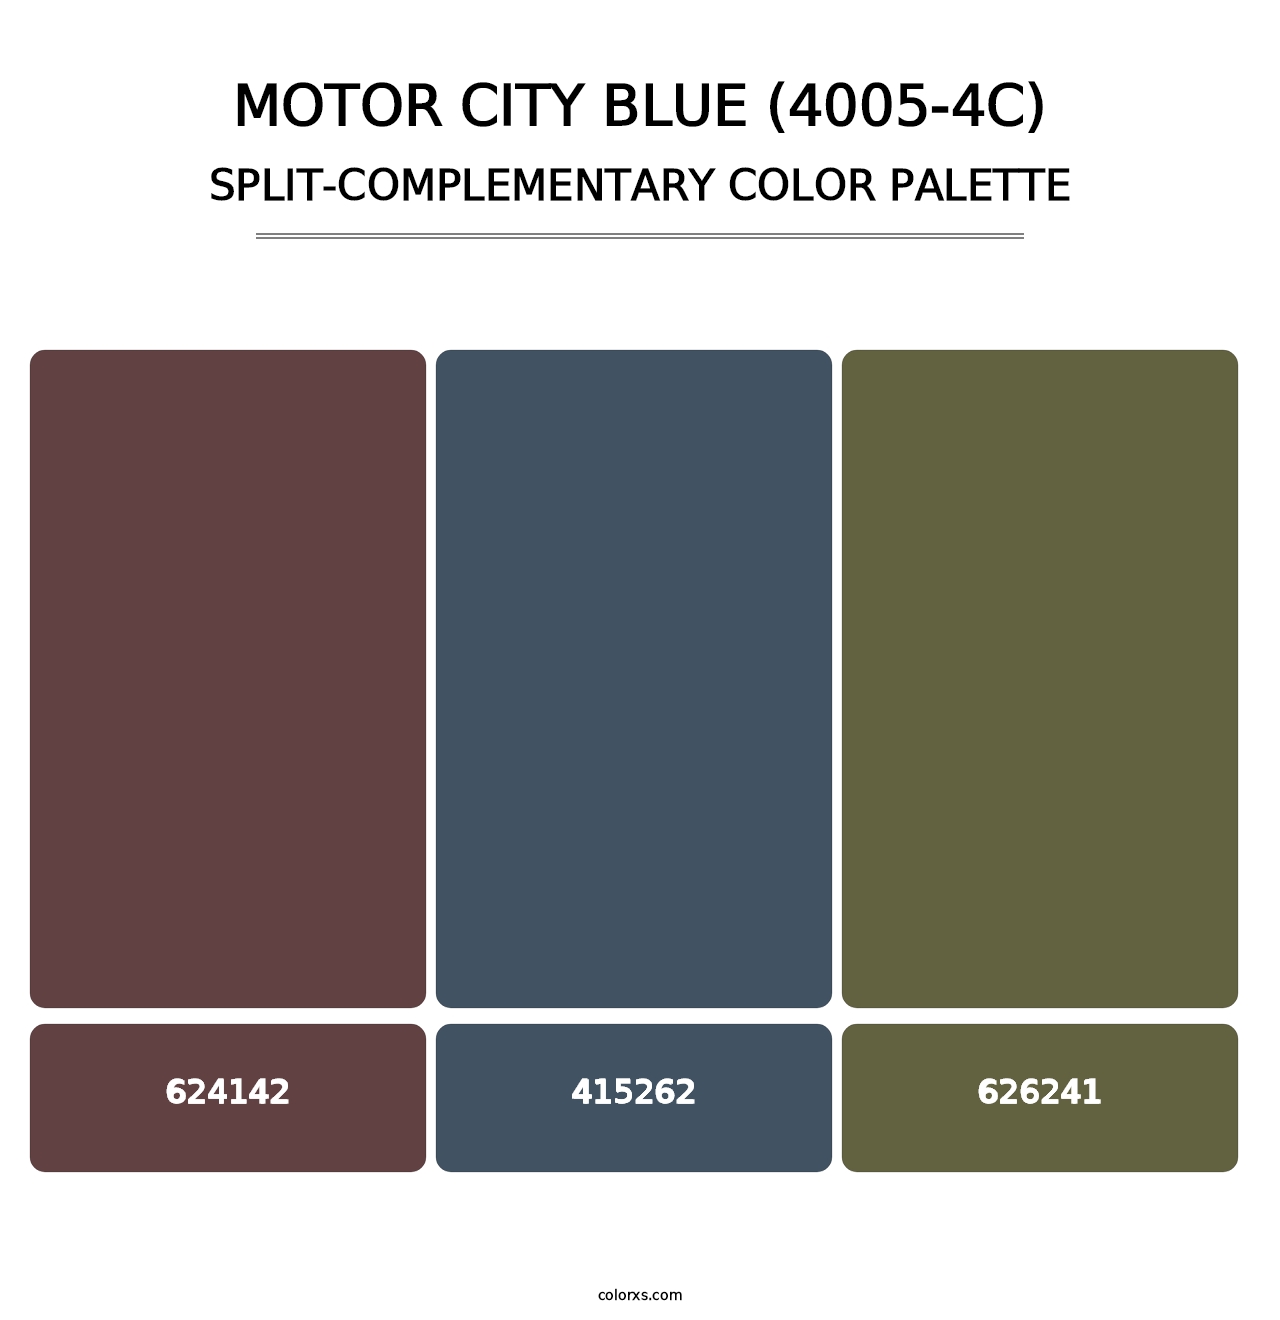 Motor City Blue (4005-4C) - Split-Complementary Color Palette